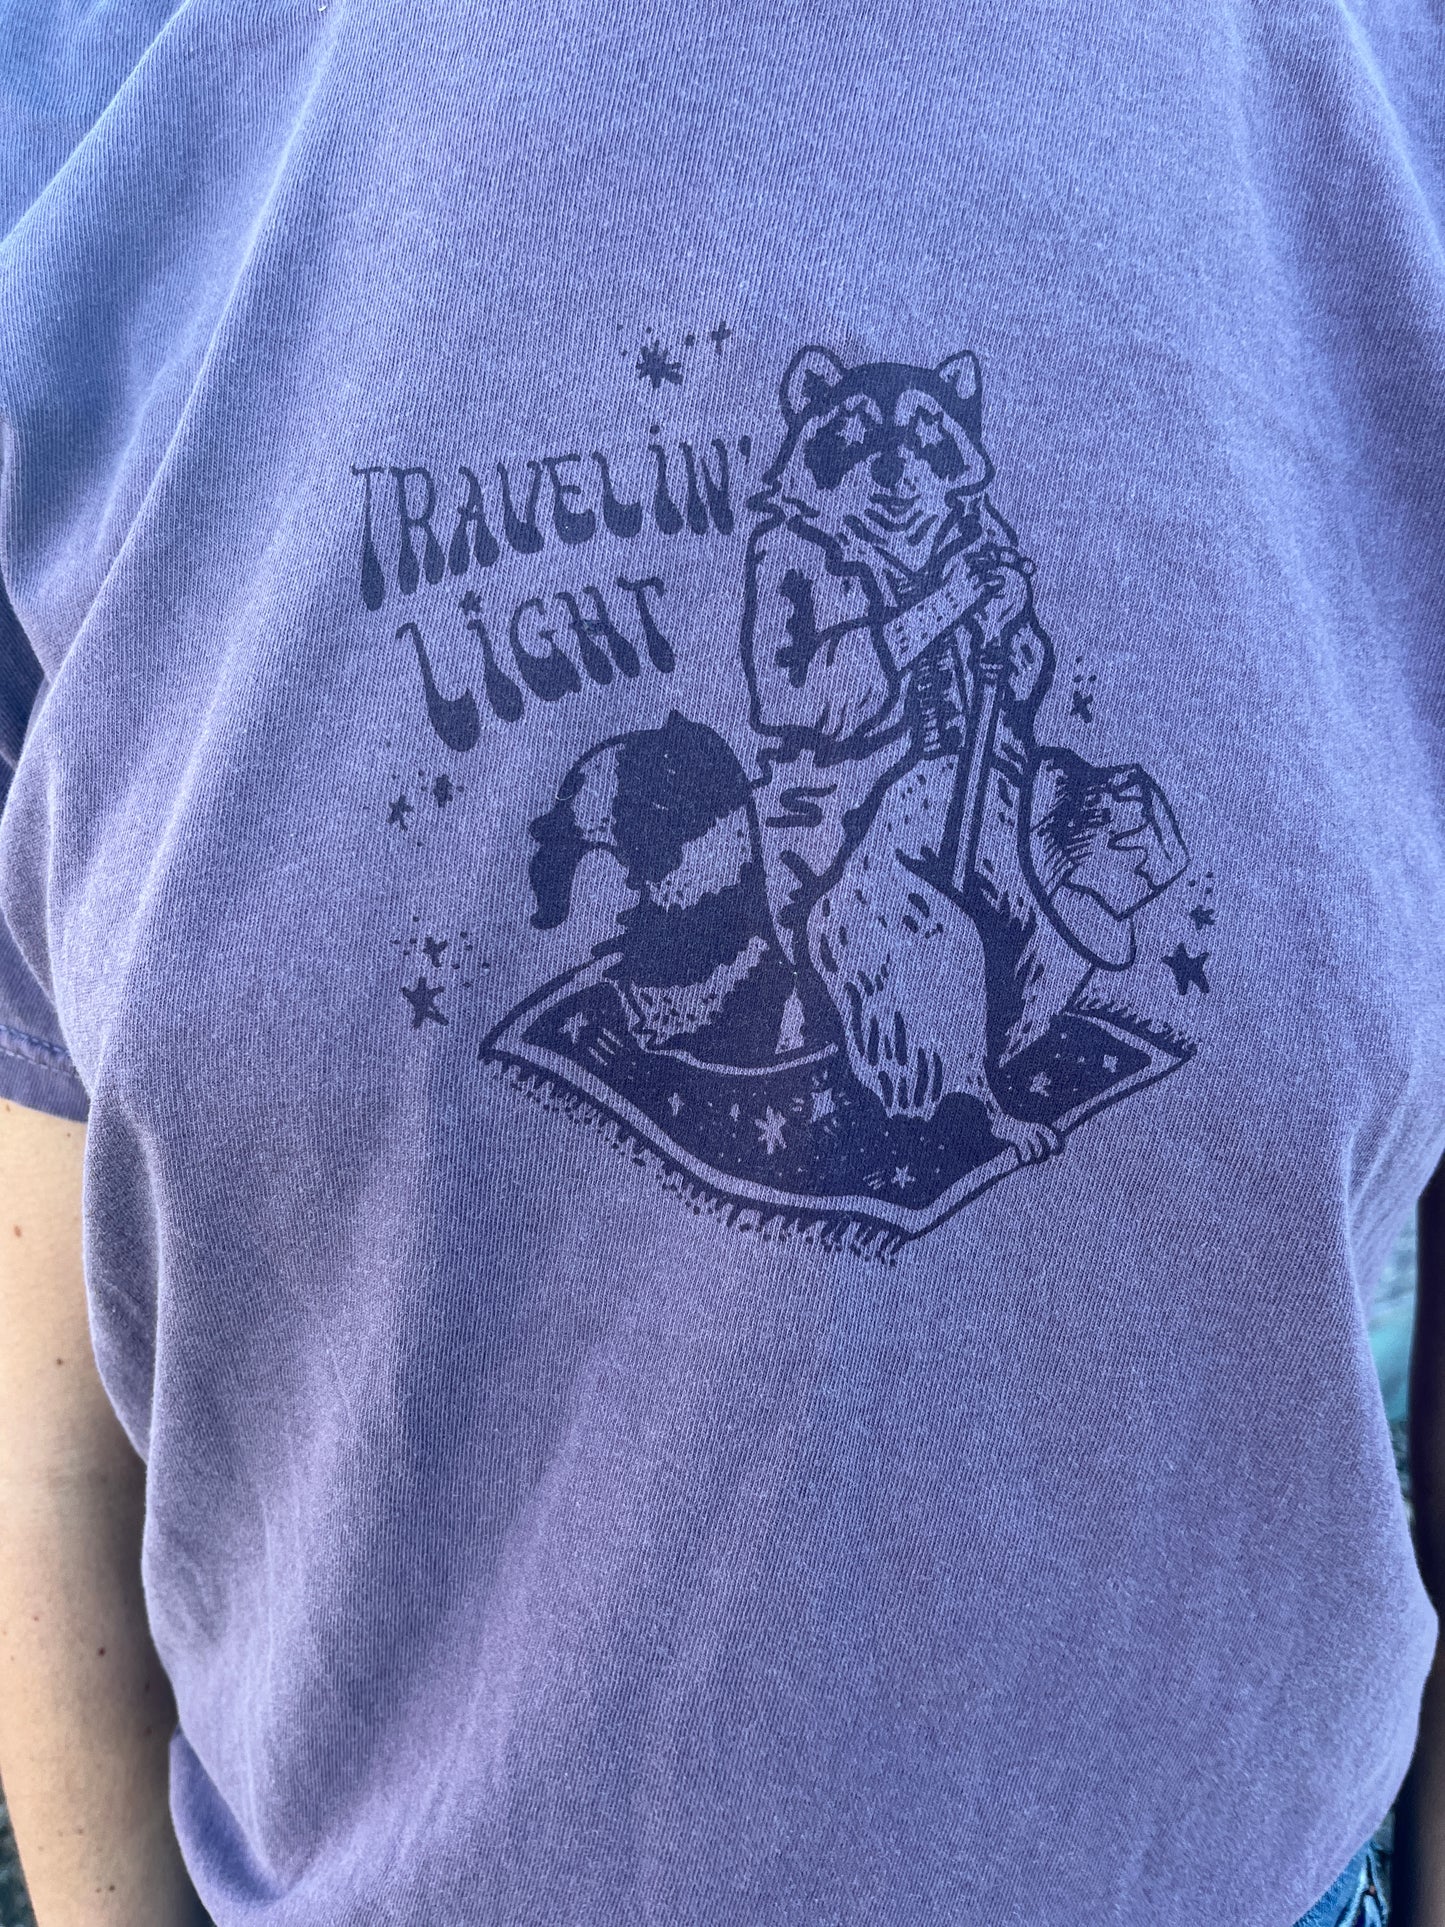 Traveling Light - Raccoon Tshirt